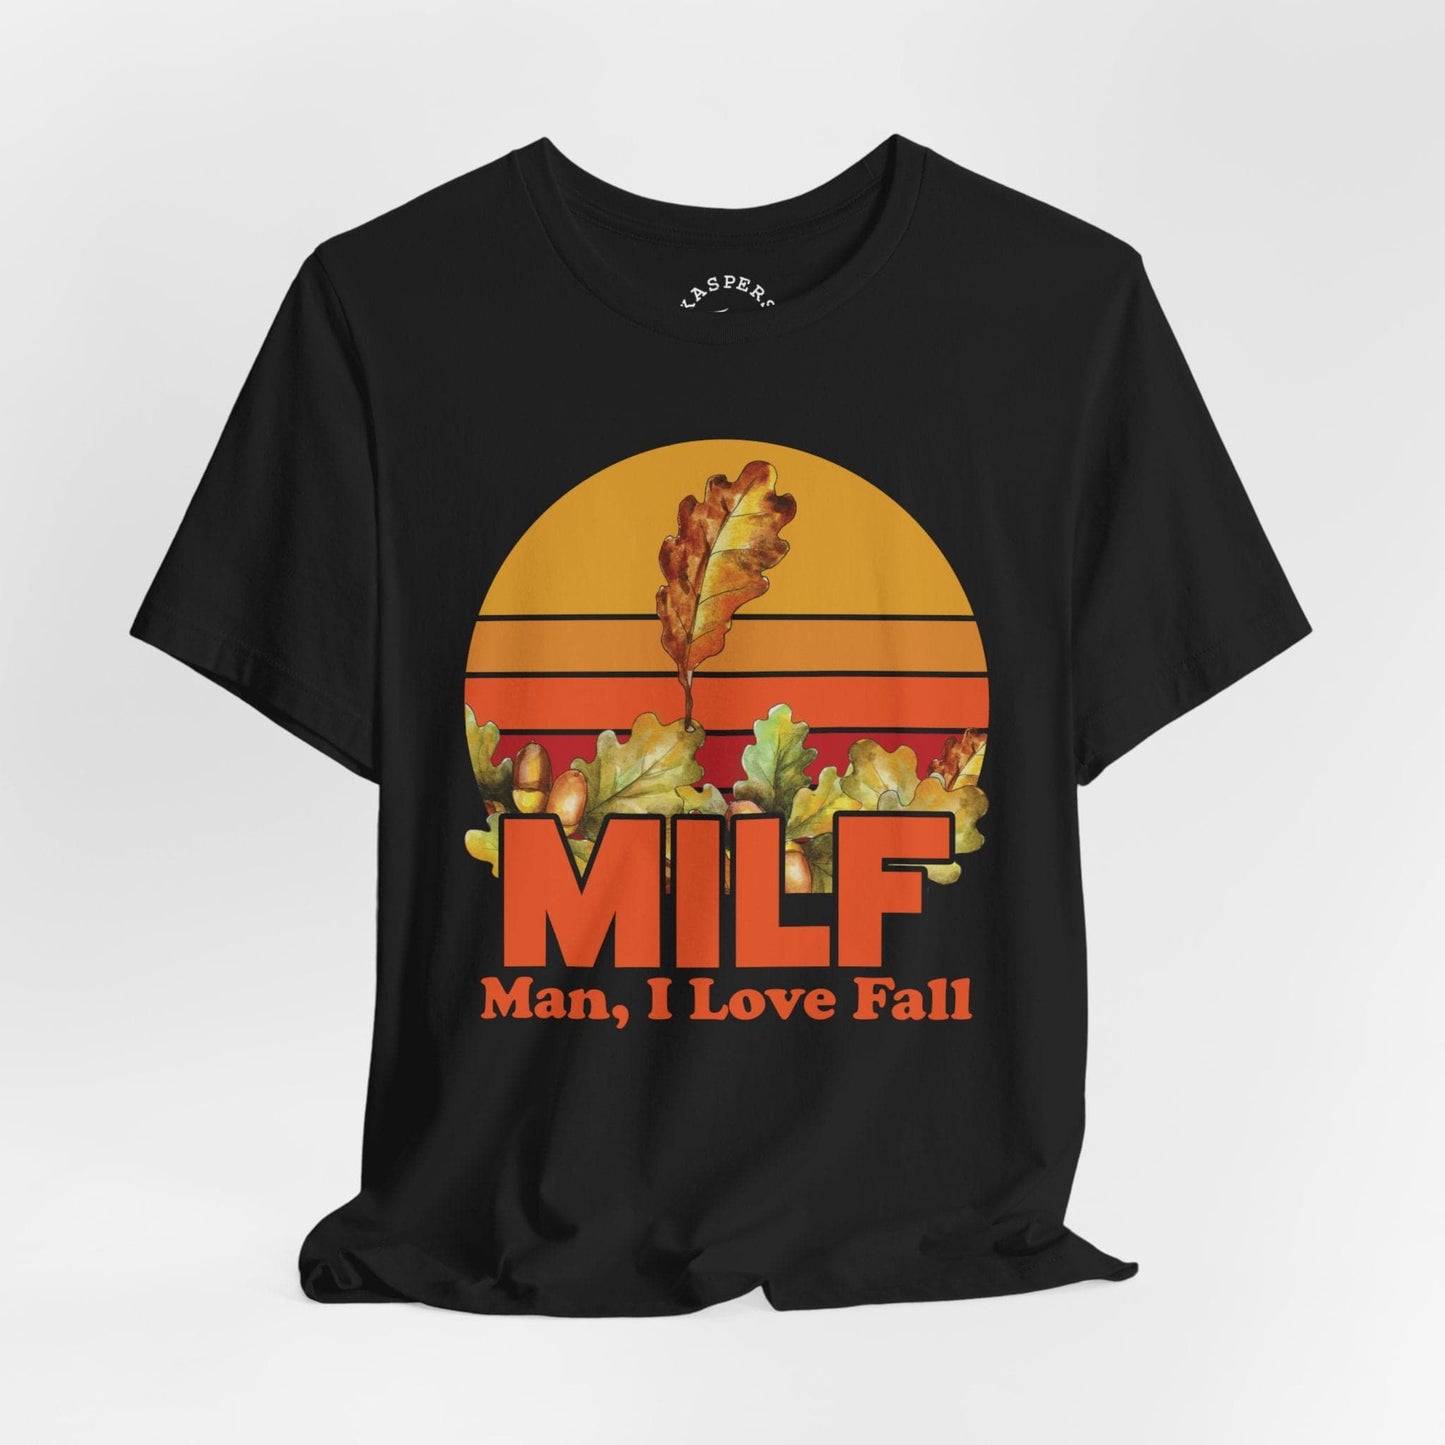 Man, I Love Fall - MILF T-Shirt